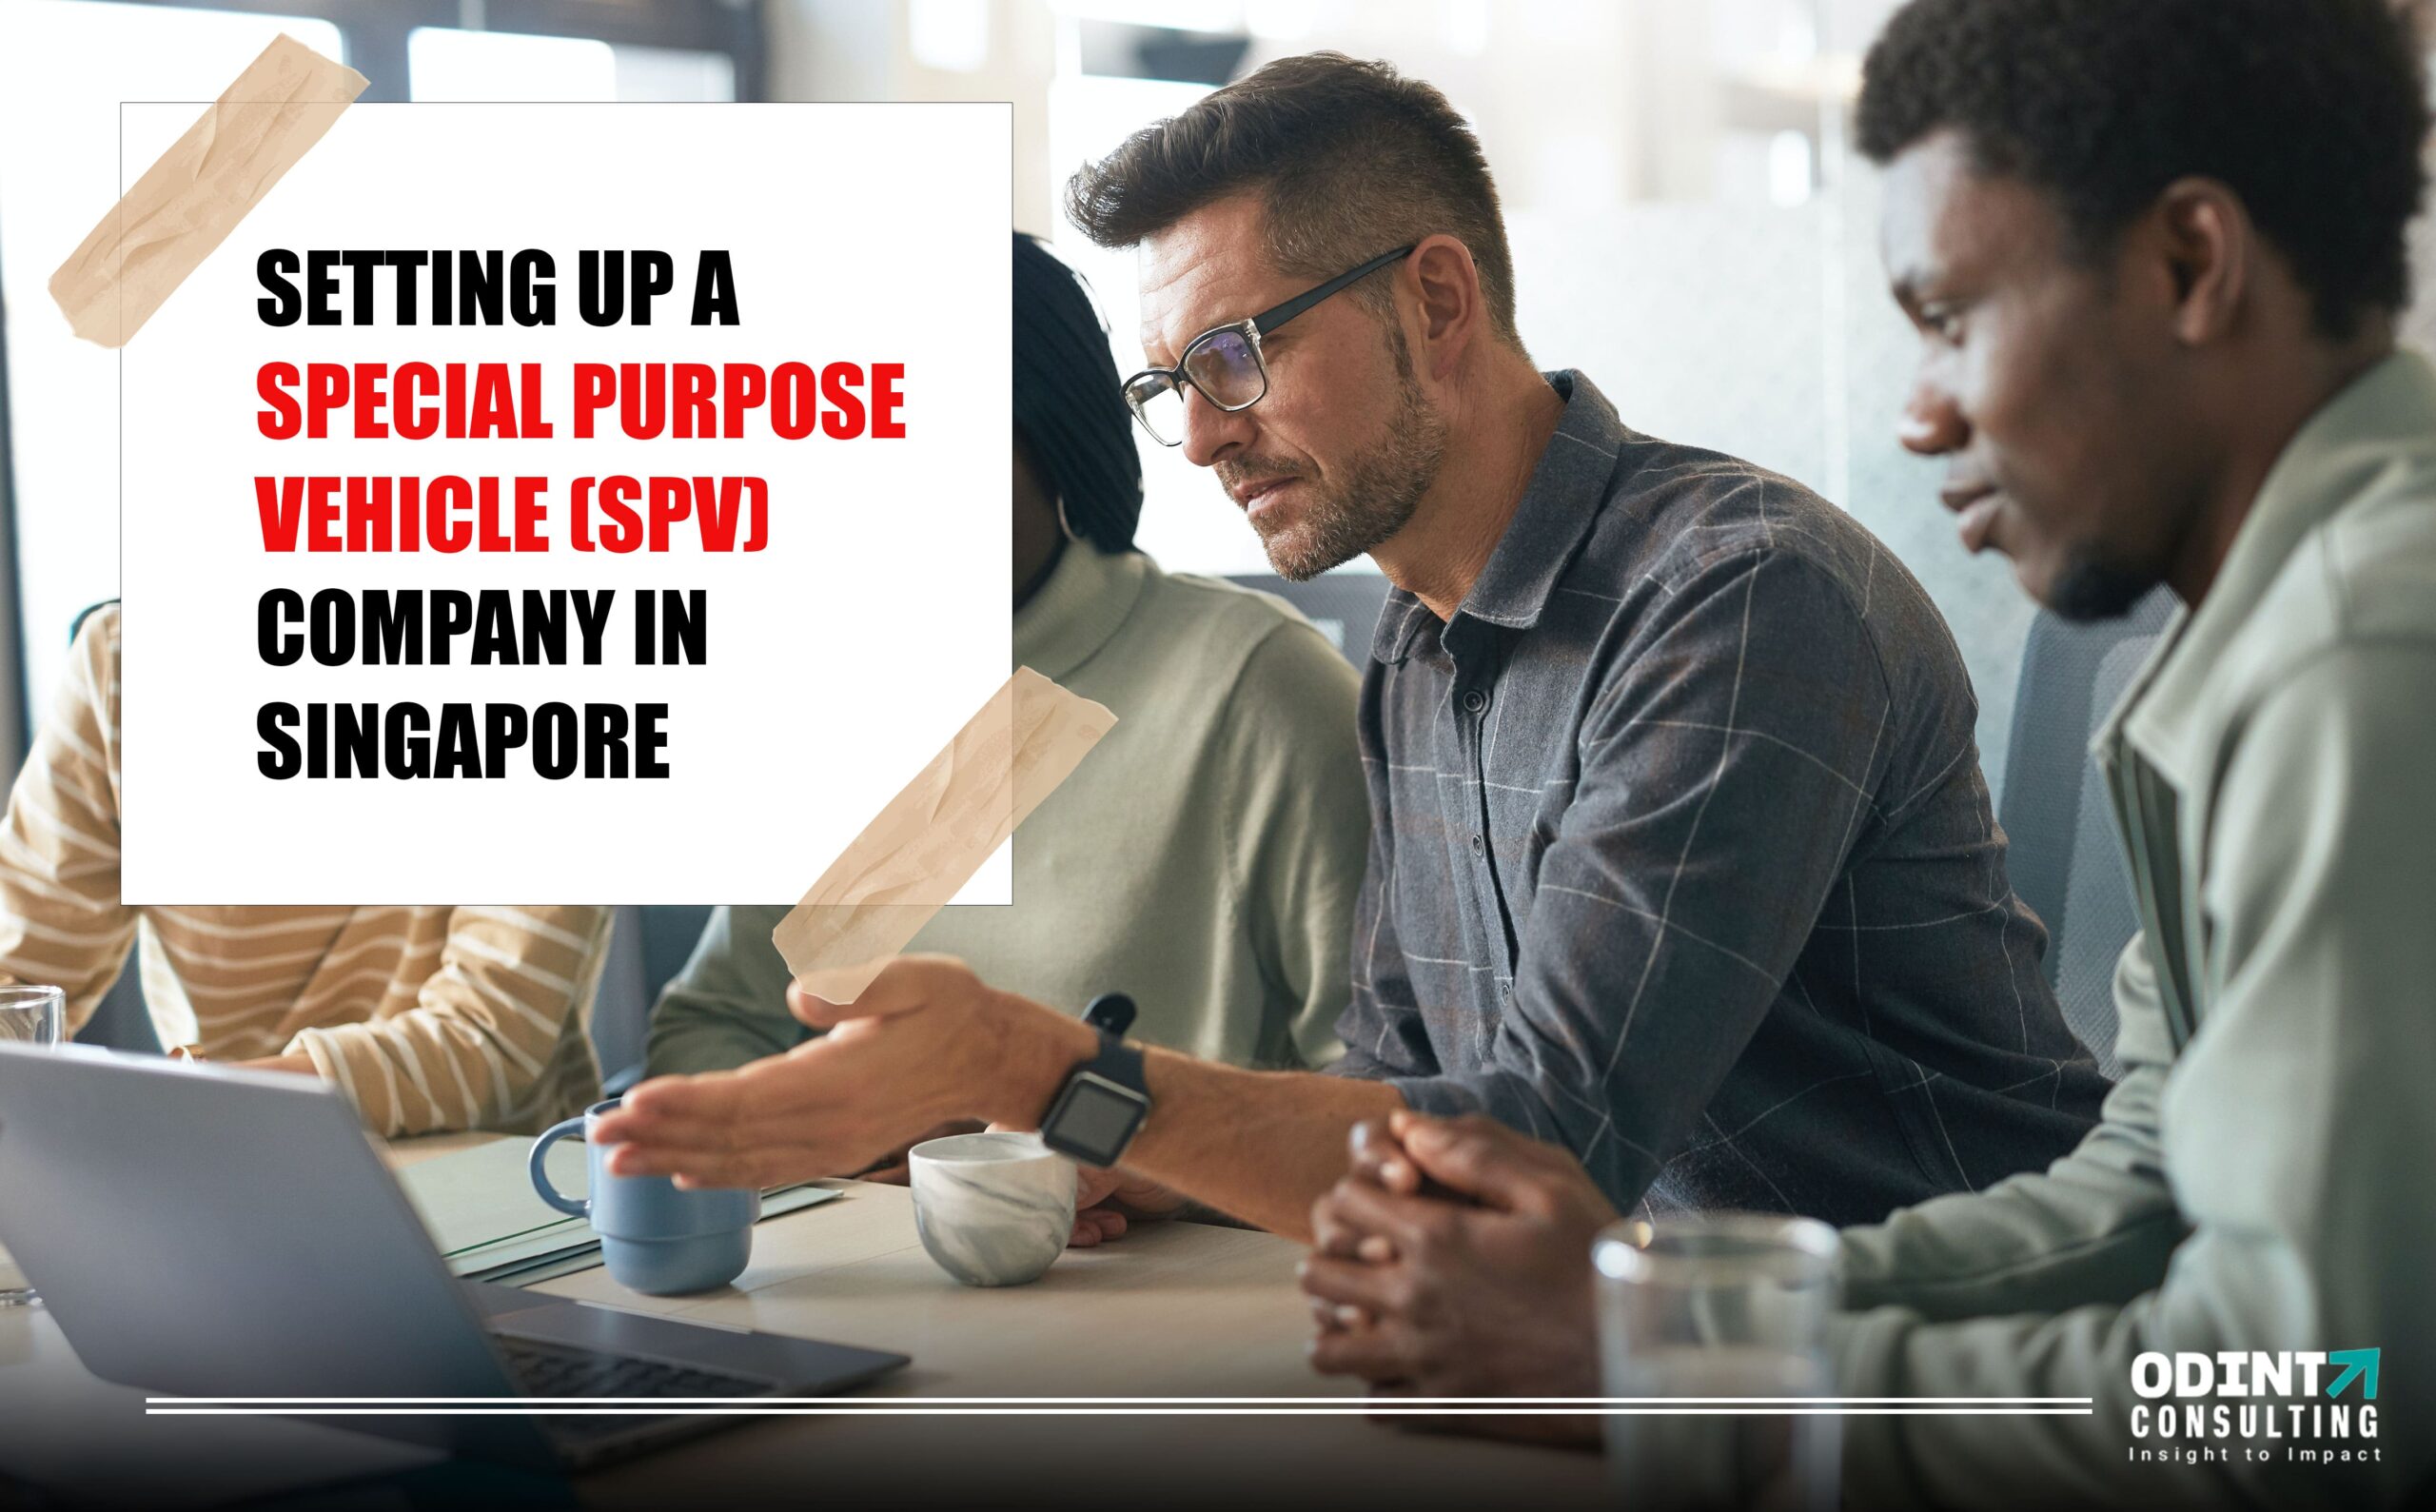 Establish a Special Purpose Vehicle(SPV) Company In Singapore